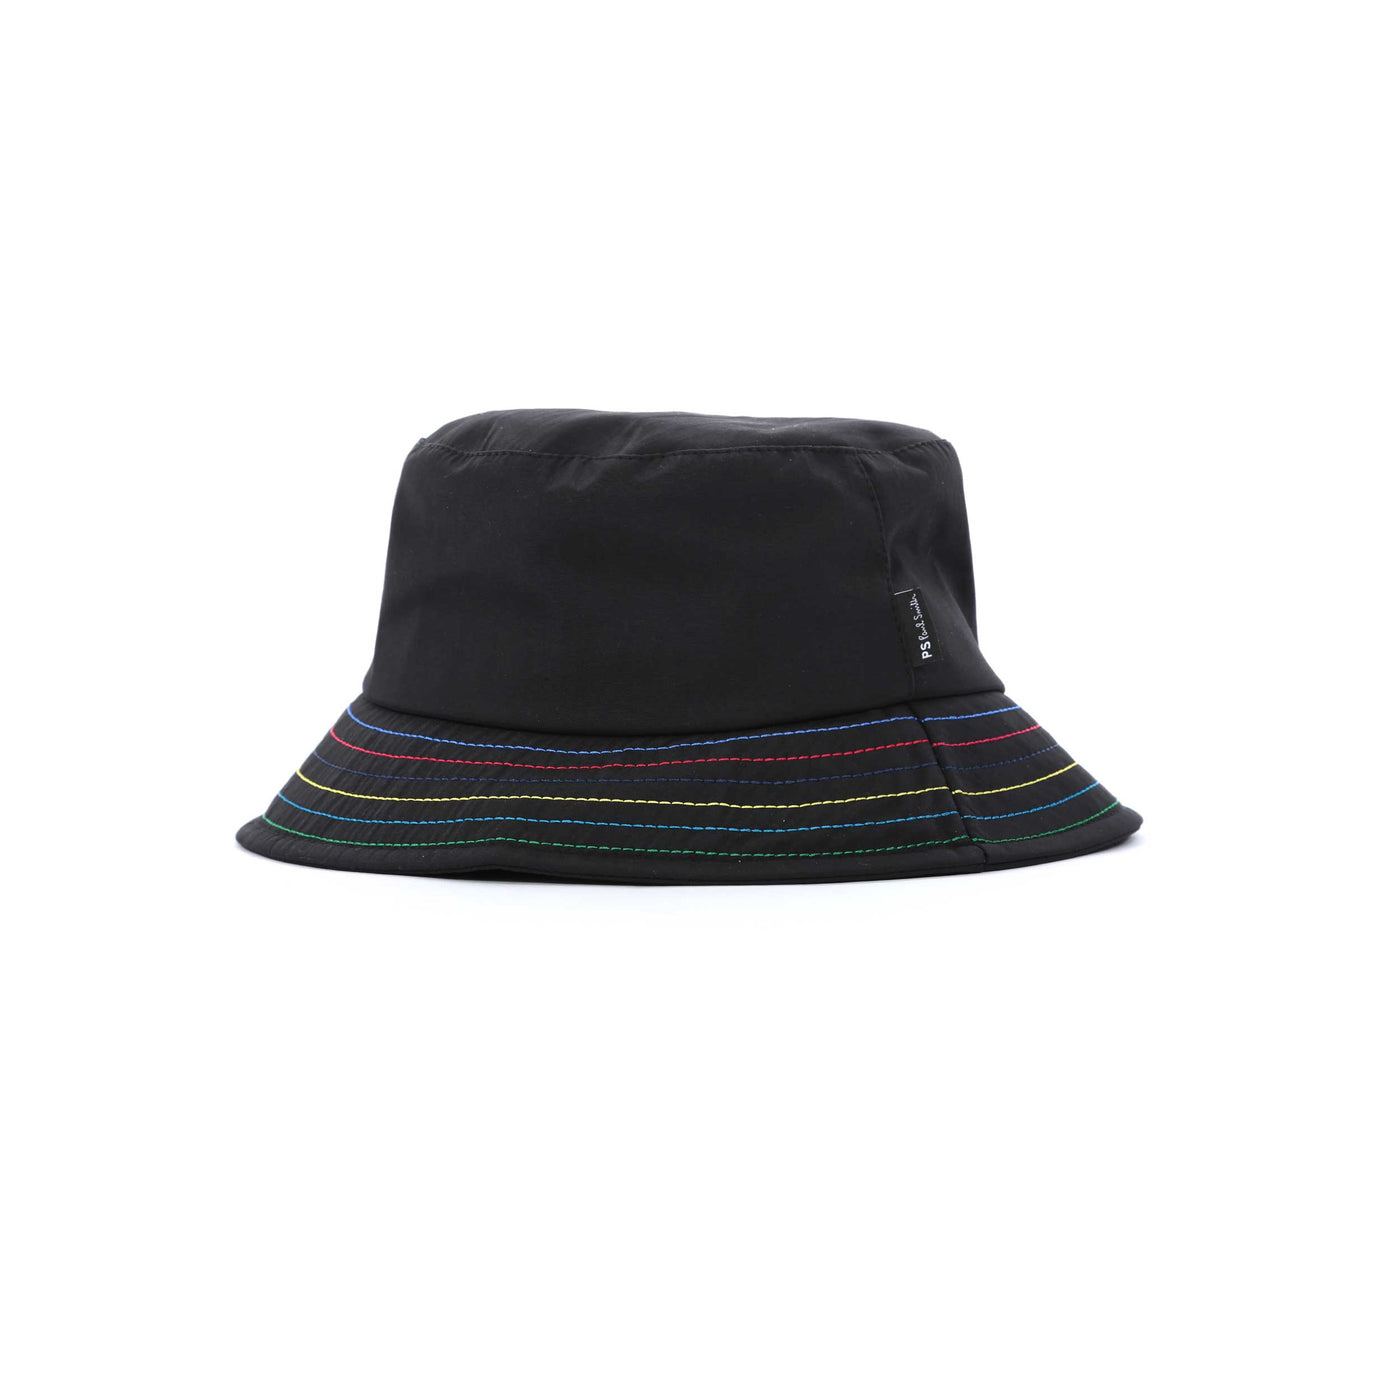 Paul Smith Stitch Bucket Hat in Black